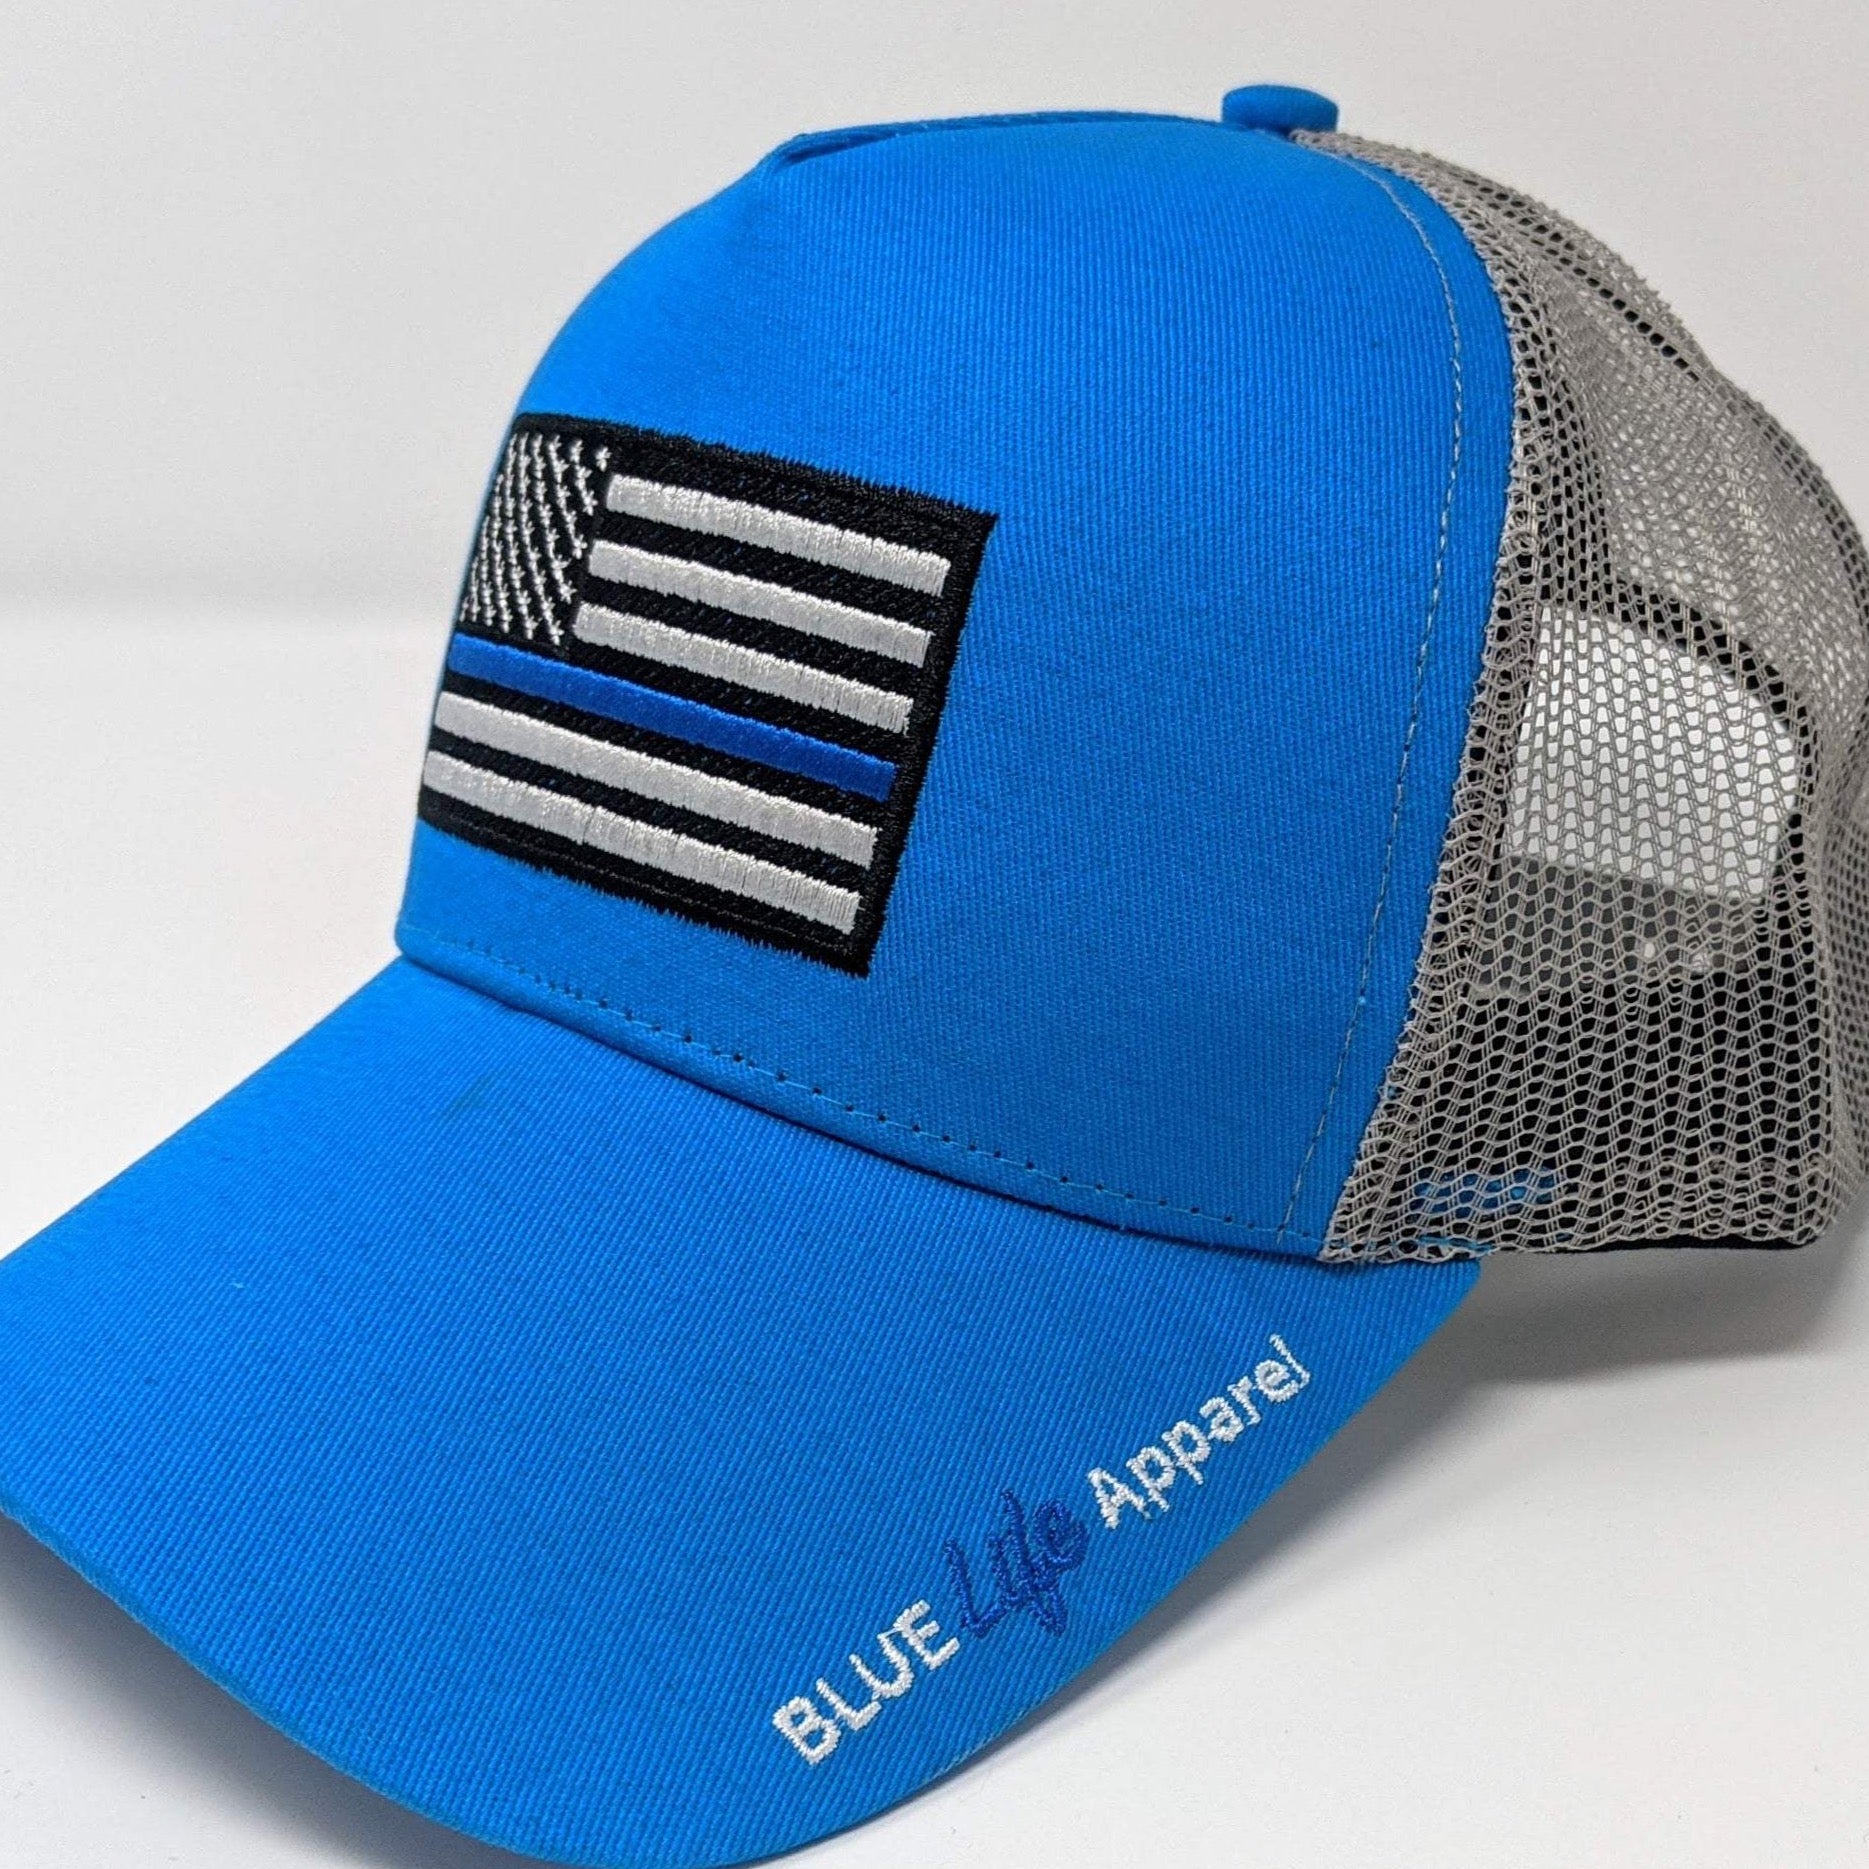 Thin Blue Line Embroidered Trucker Hat - Cobalt Blue Hats Blue Life Apparel 